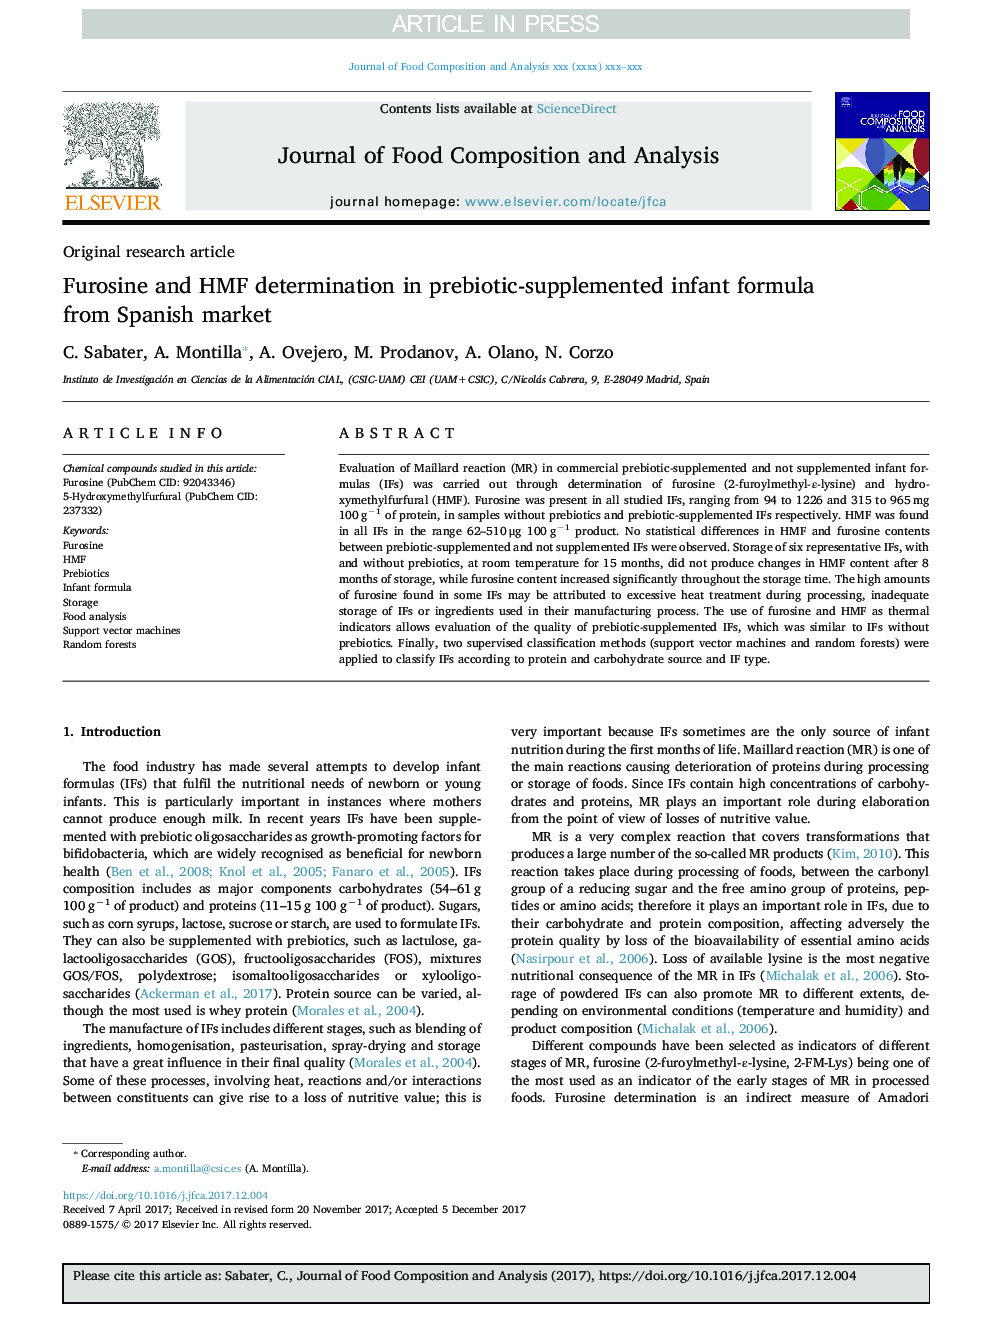 Furosine and HMF determination in prebiotic-supplemented infant formula from Spanish market